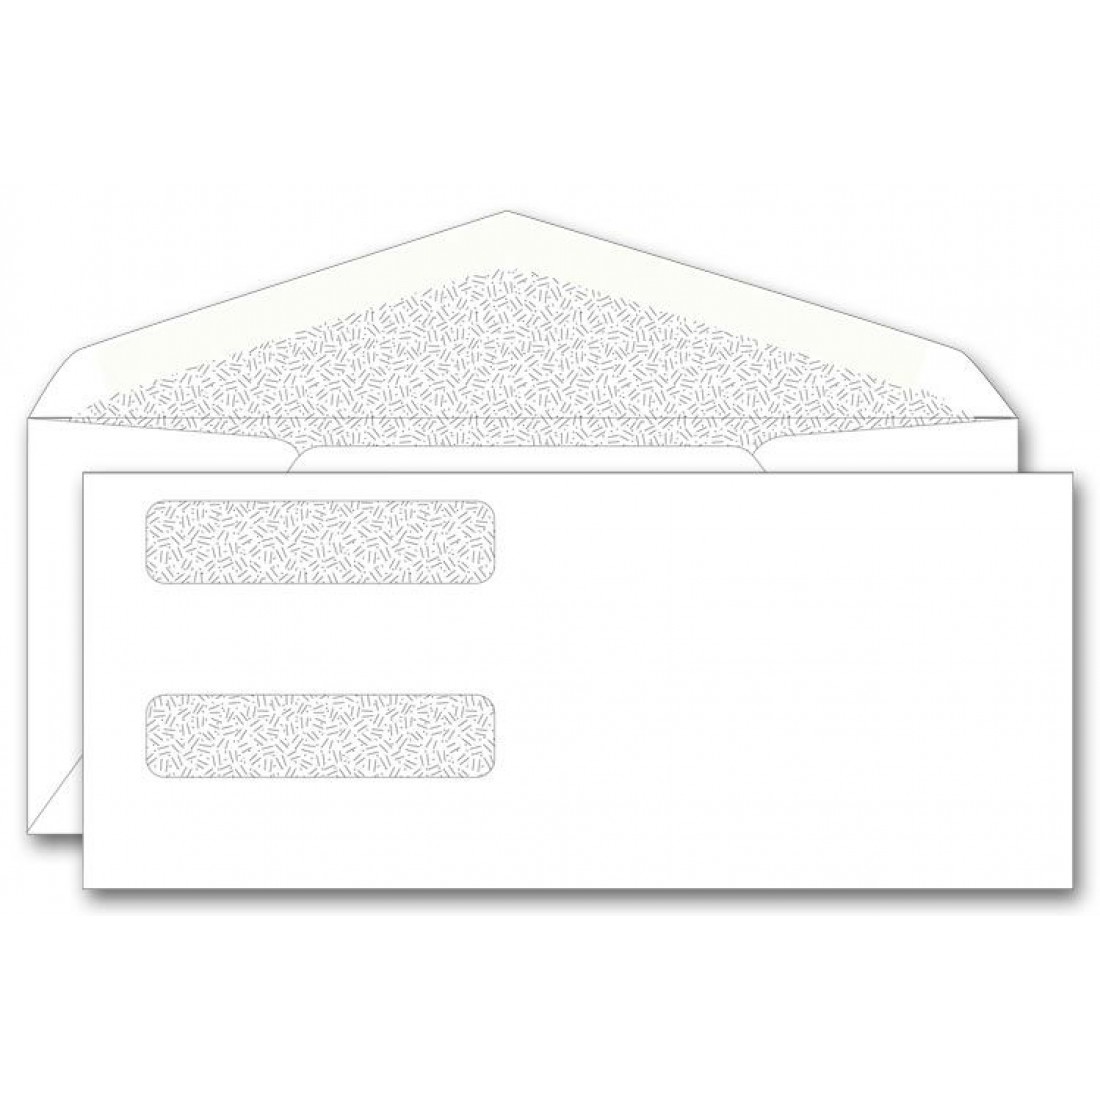 print window envelopes